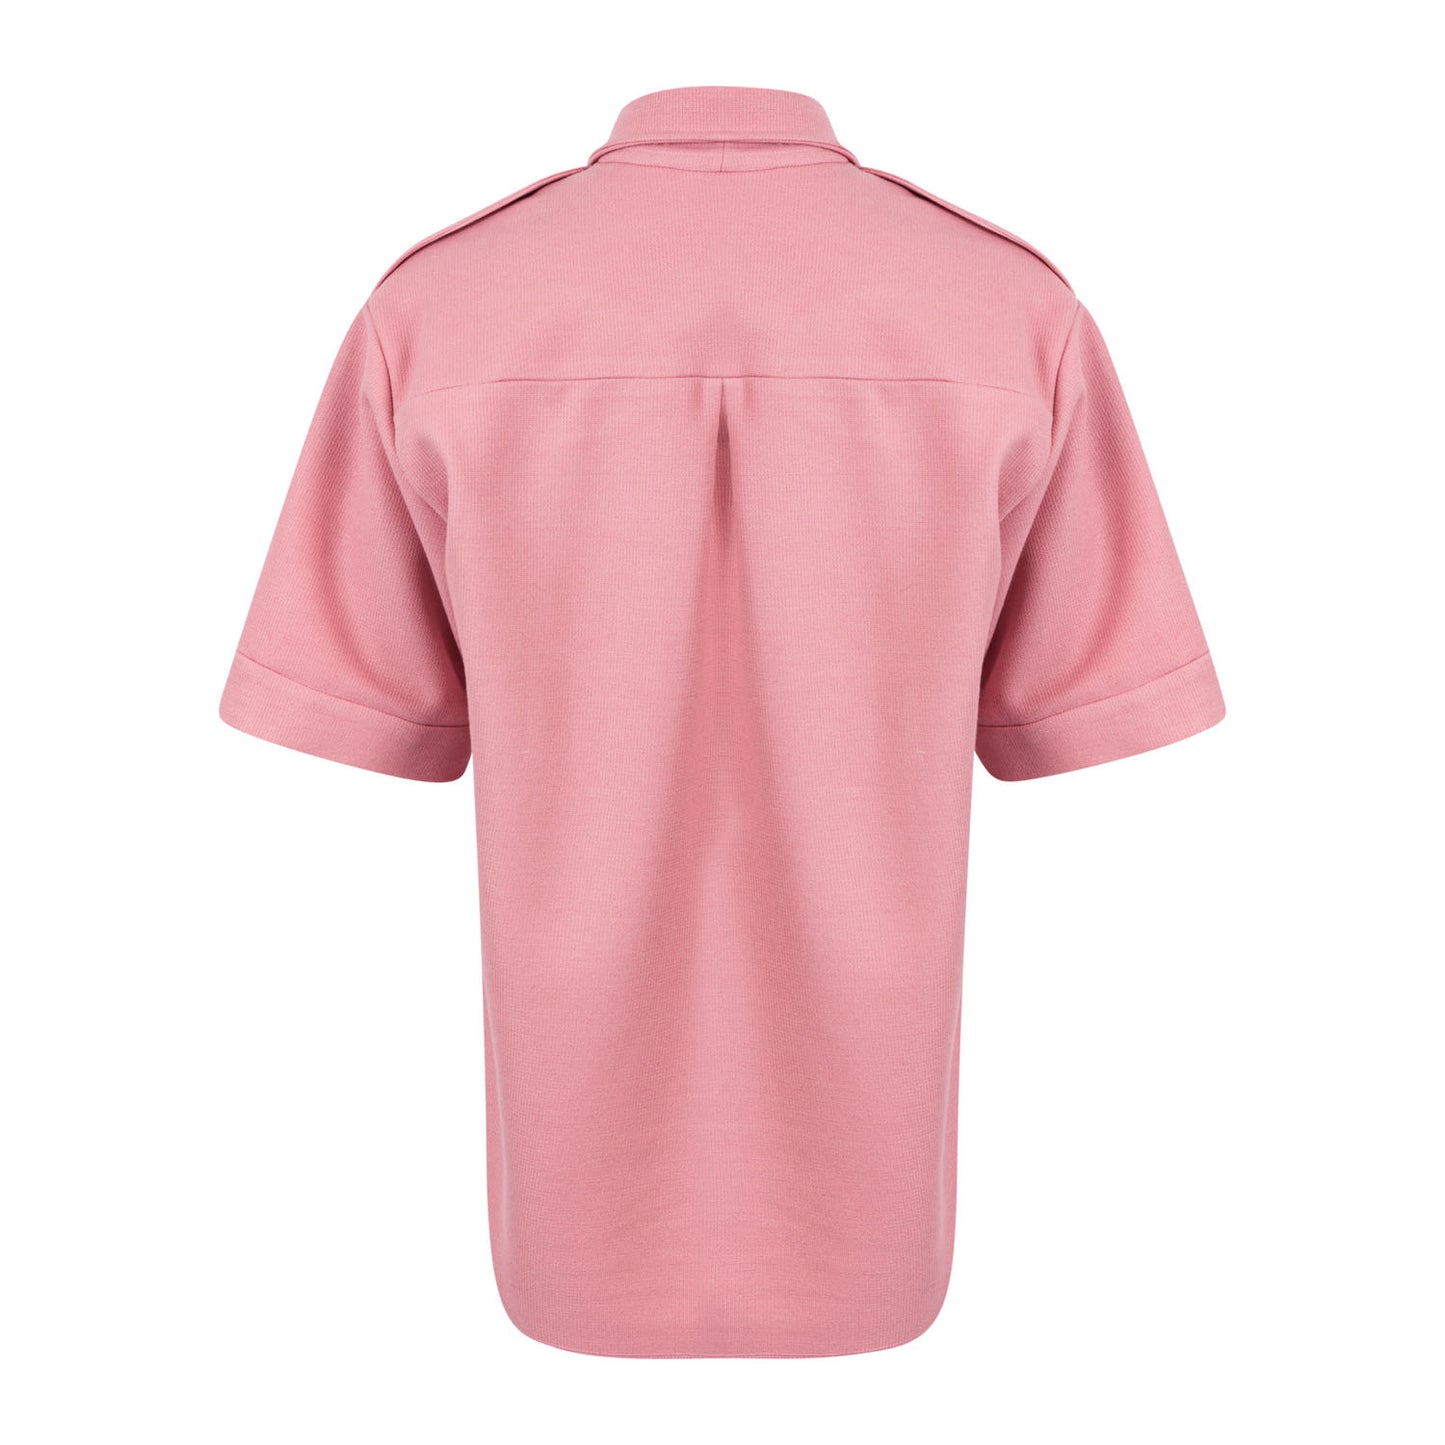 Mauve Boxy Knit Short Sleeve Shirt